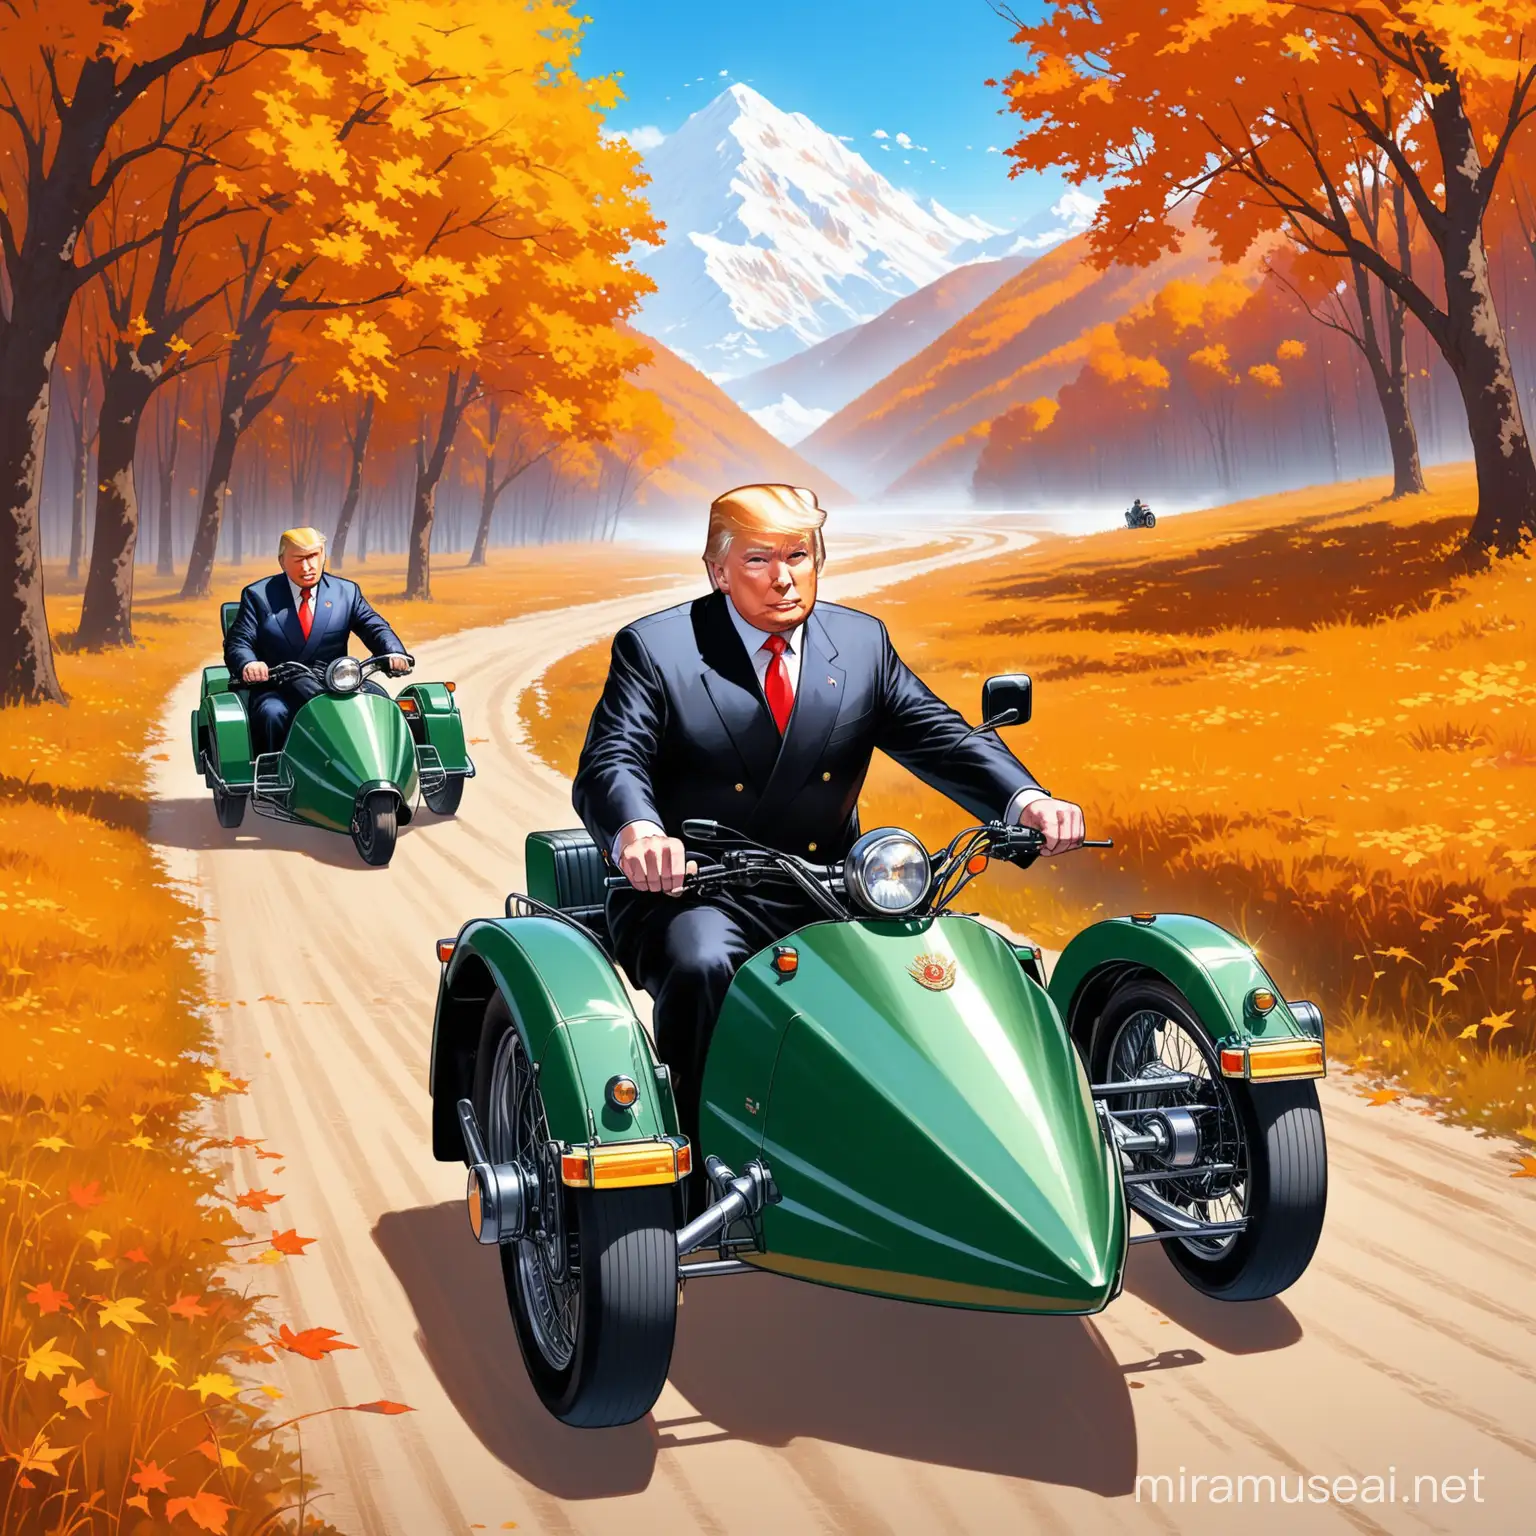 Putin and Trump Ride Sidecar Motorcycle in Dense Grassland